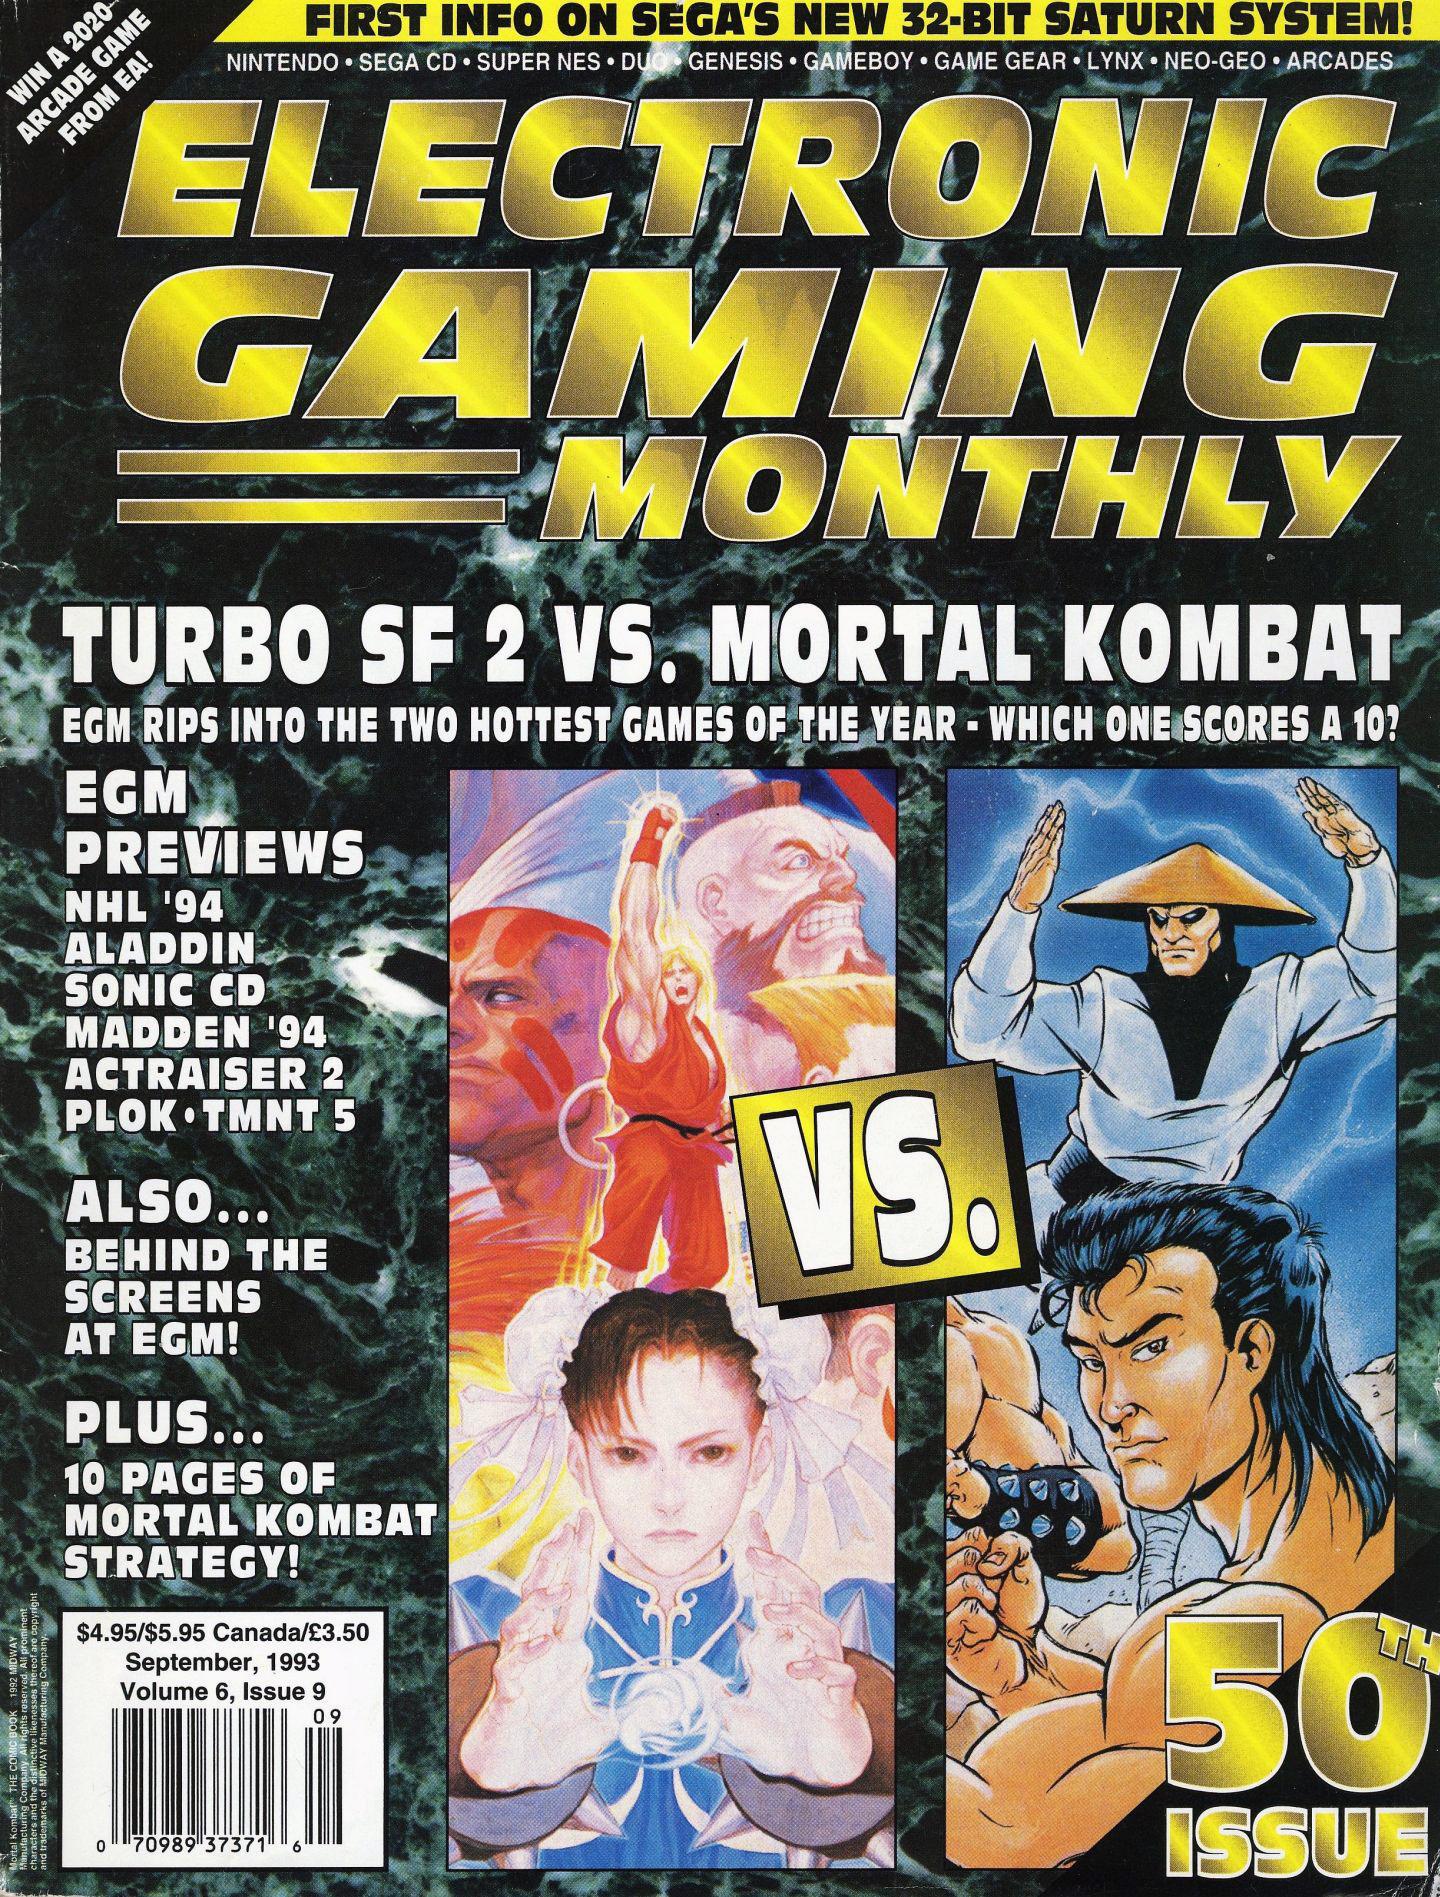 Was Mortal Kombat or Street Fighter II a better fighting arcade